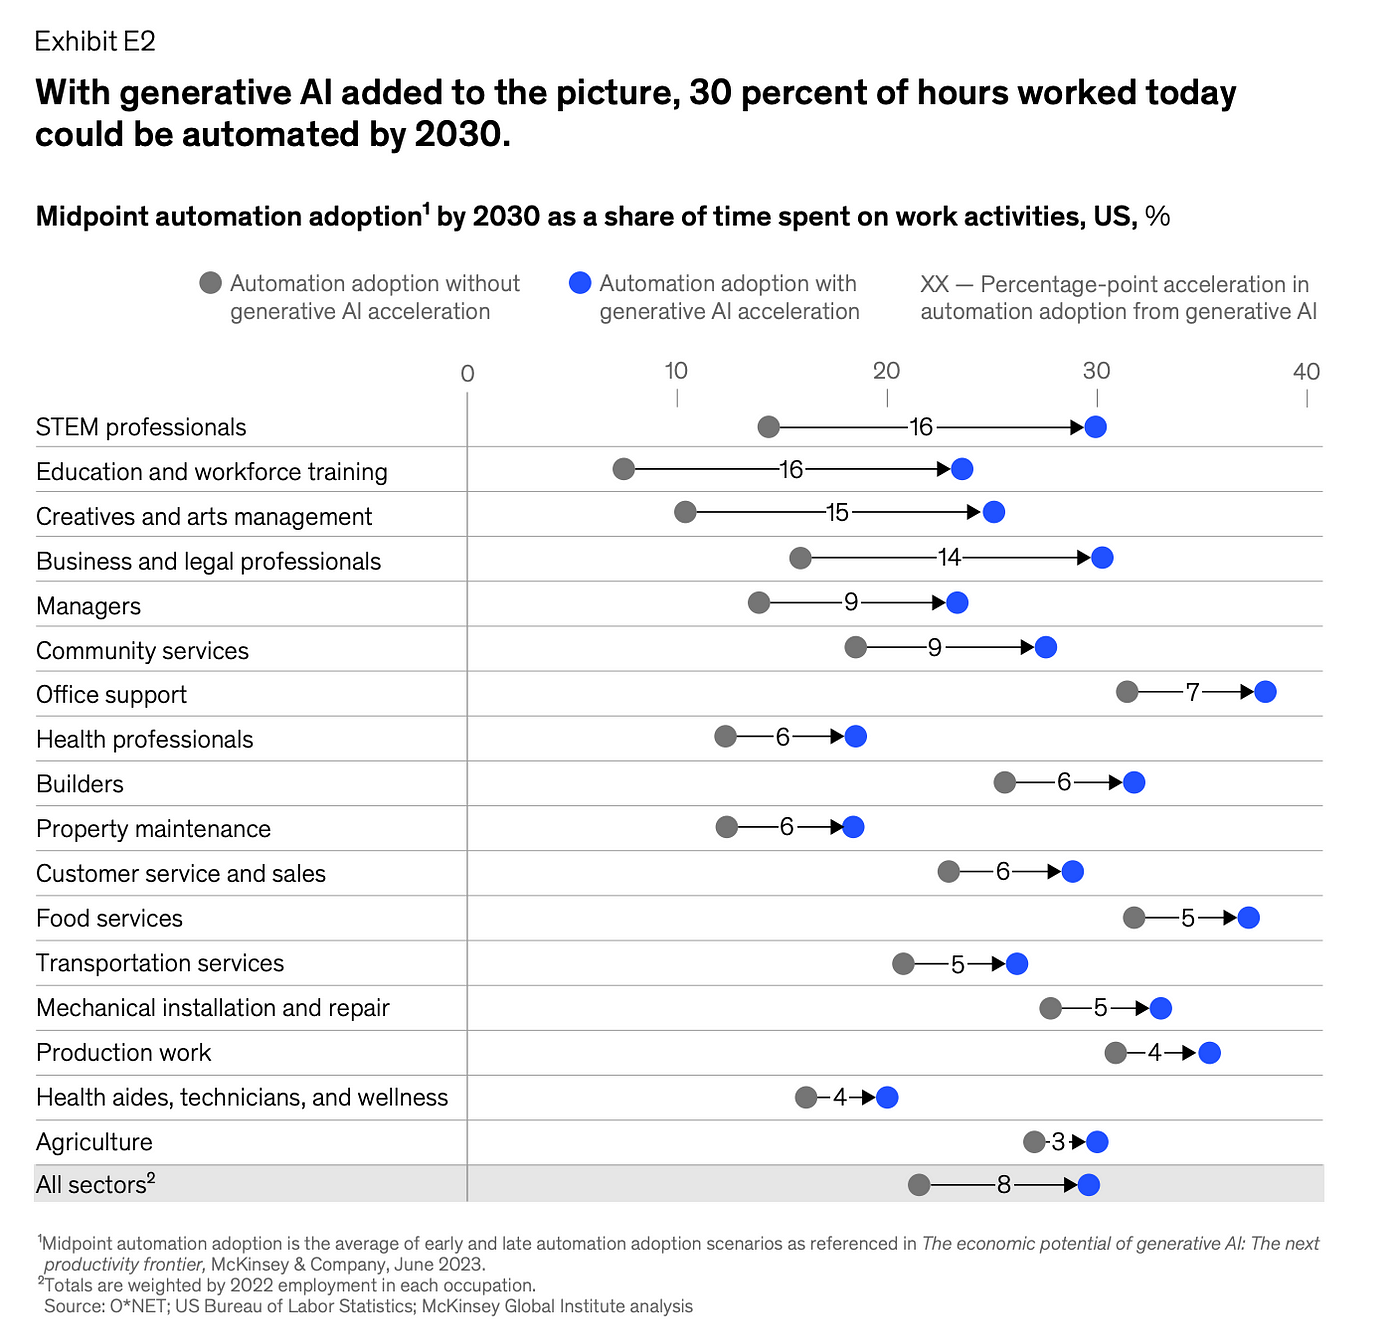 Generative AI and the future of work in America